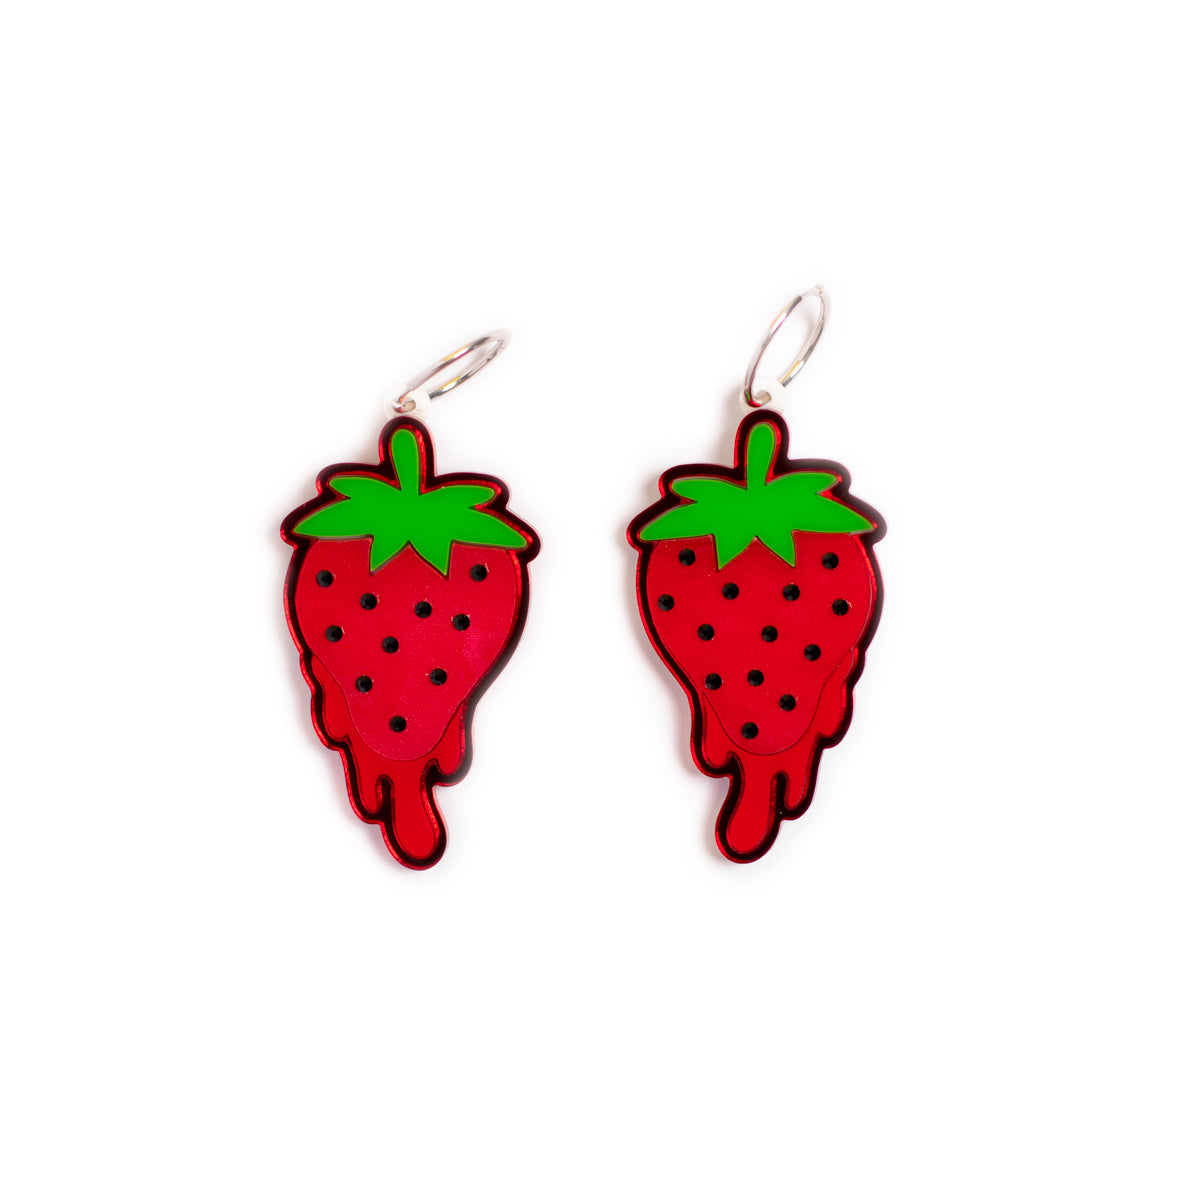 The Strawberry Earrings